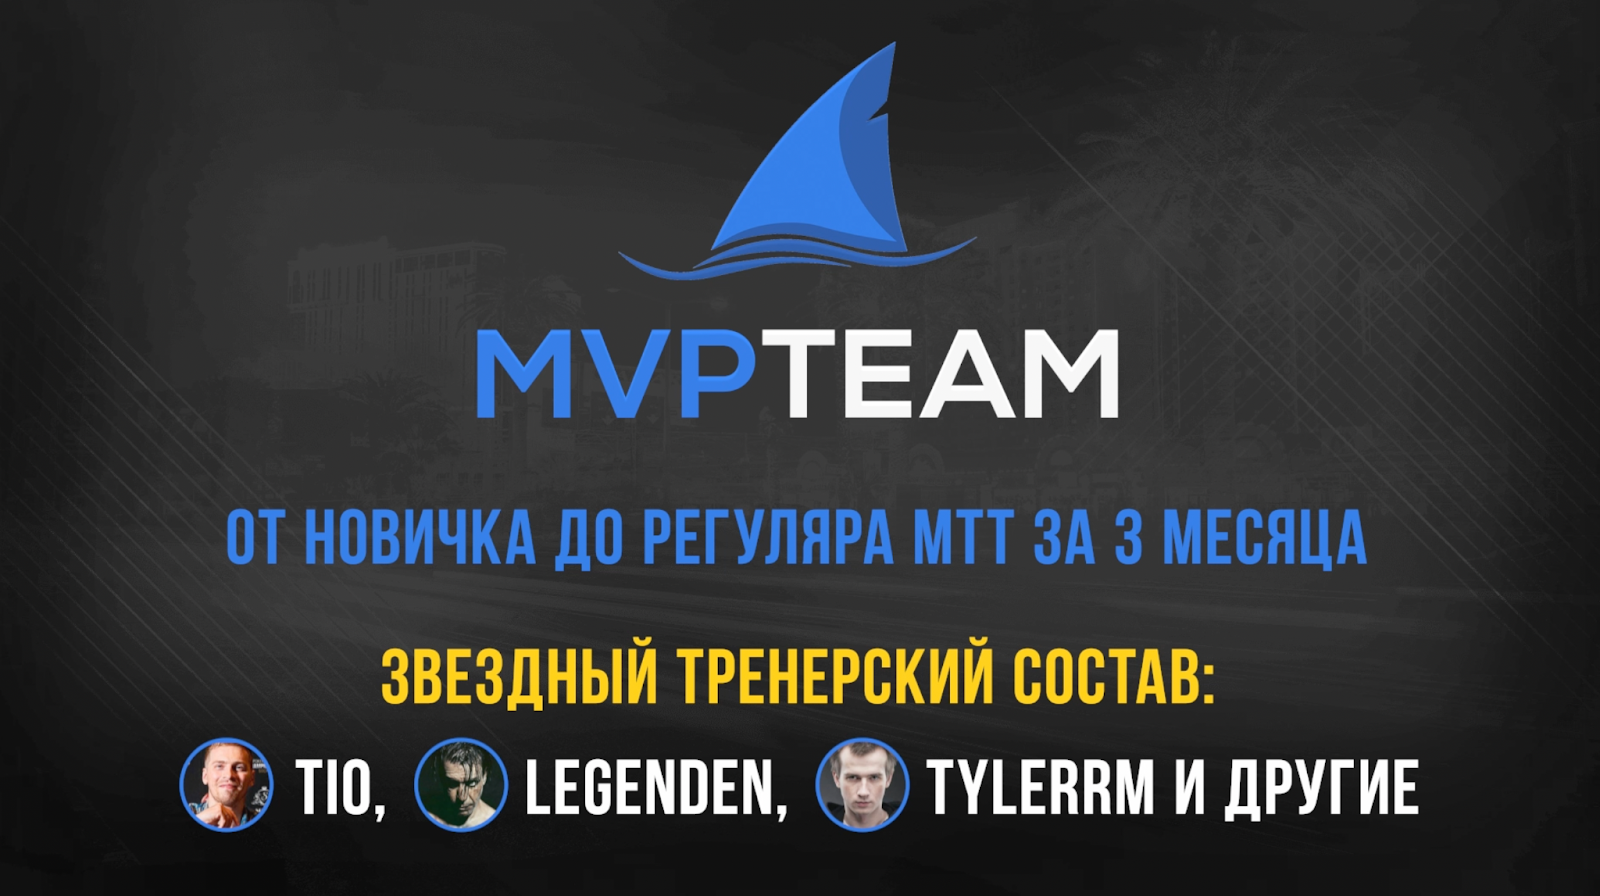 MVP team